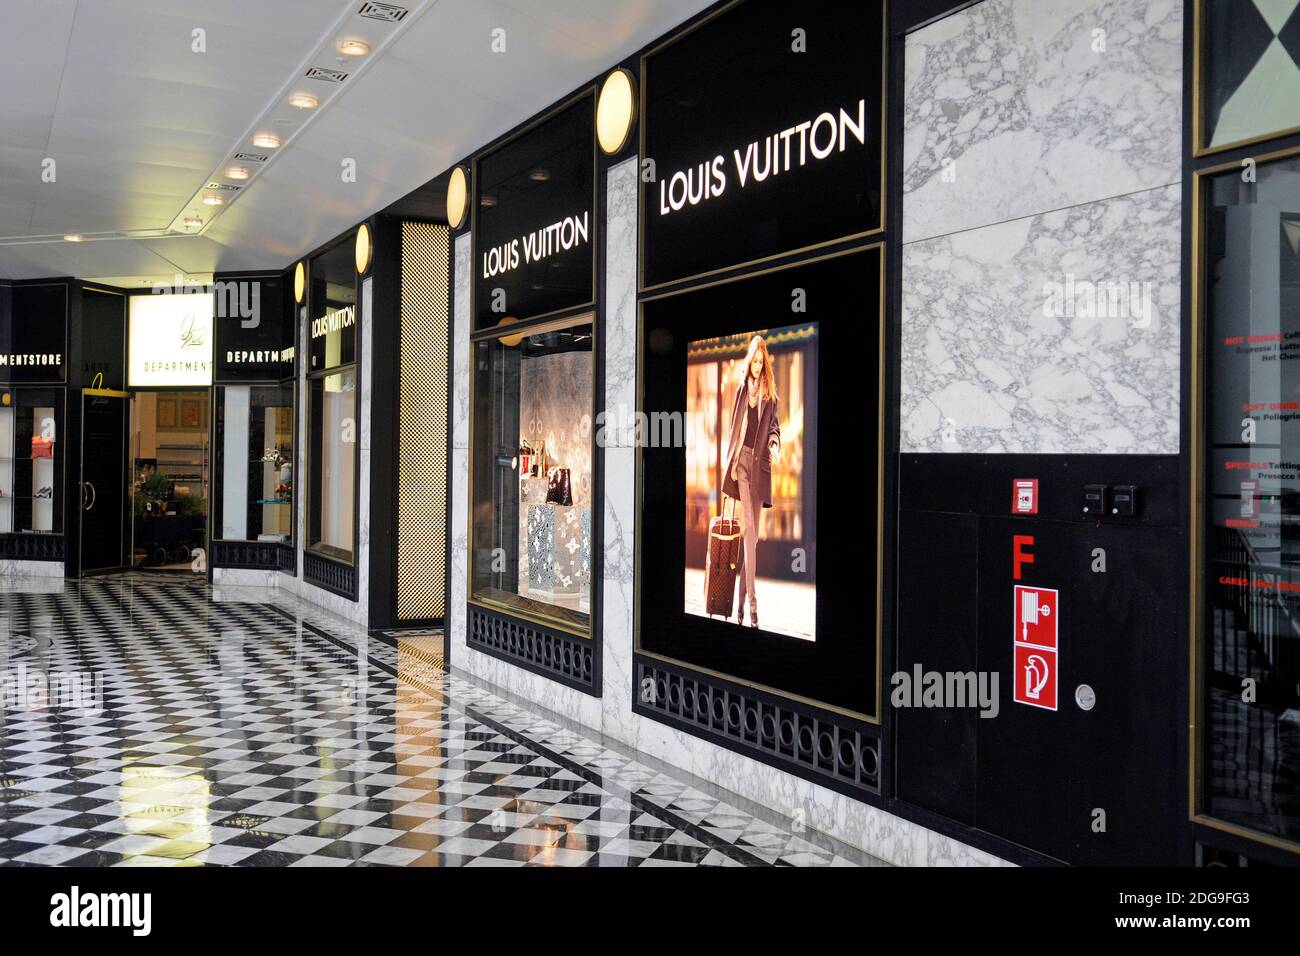 Louis Vuitton Laden in Berlin, Friedrichstr Stock Photo - Alamy